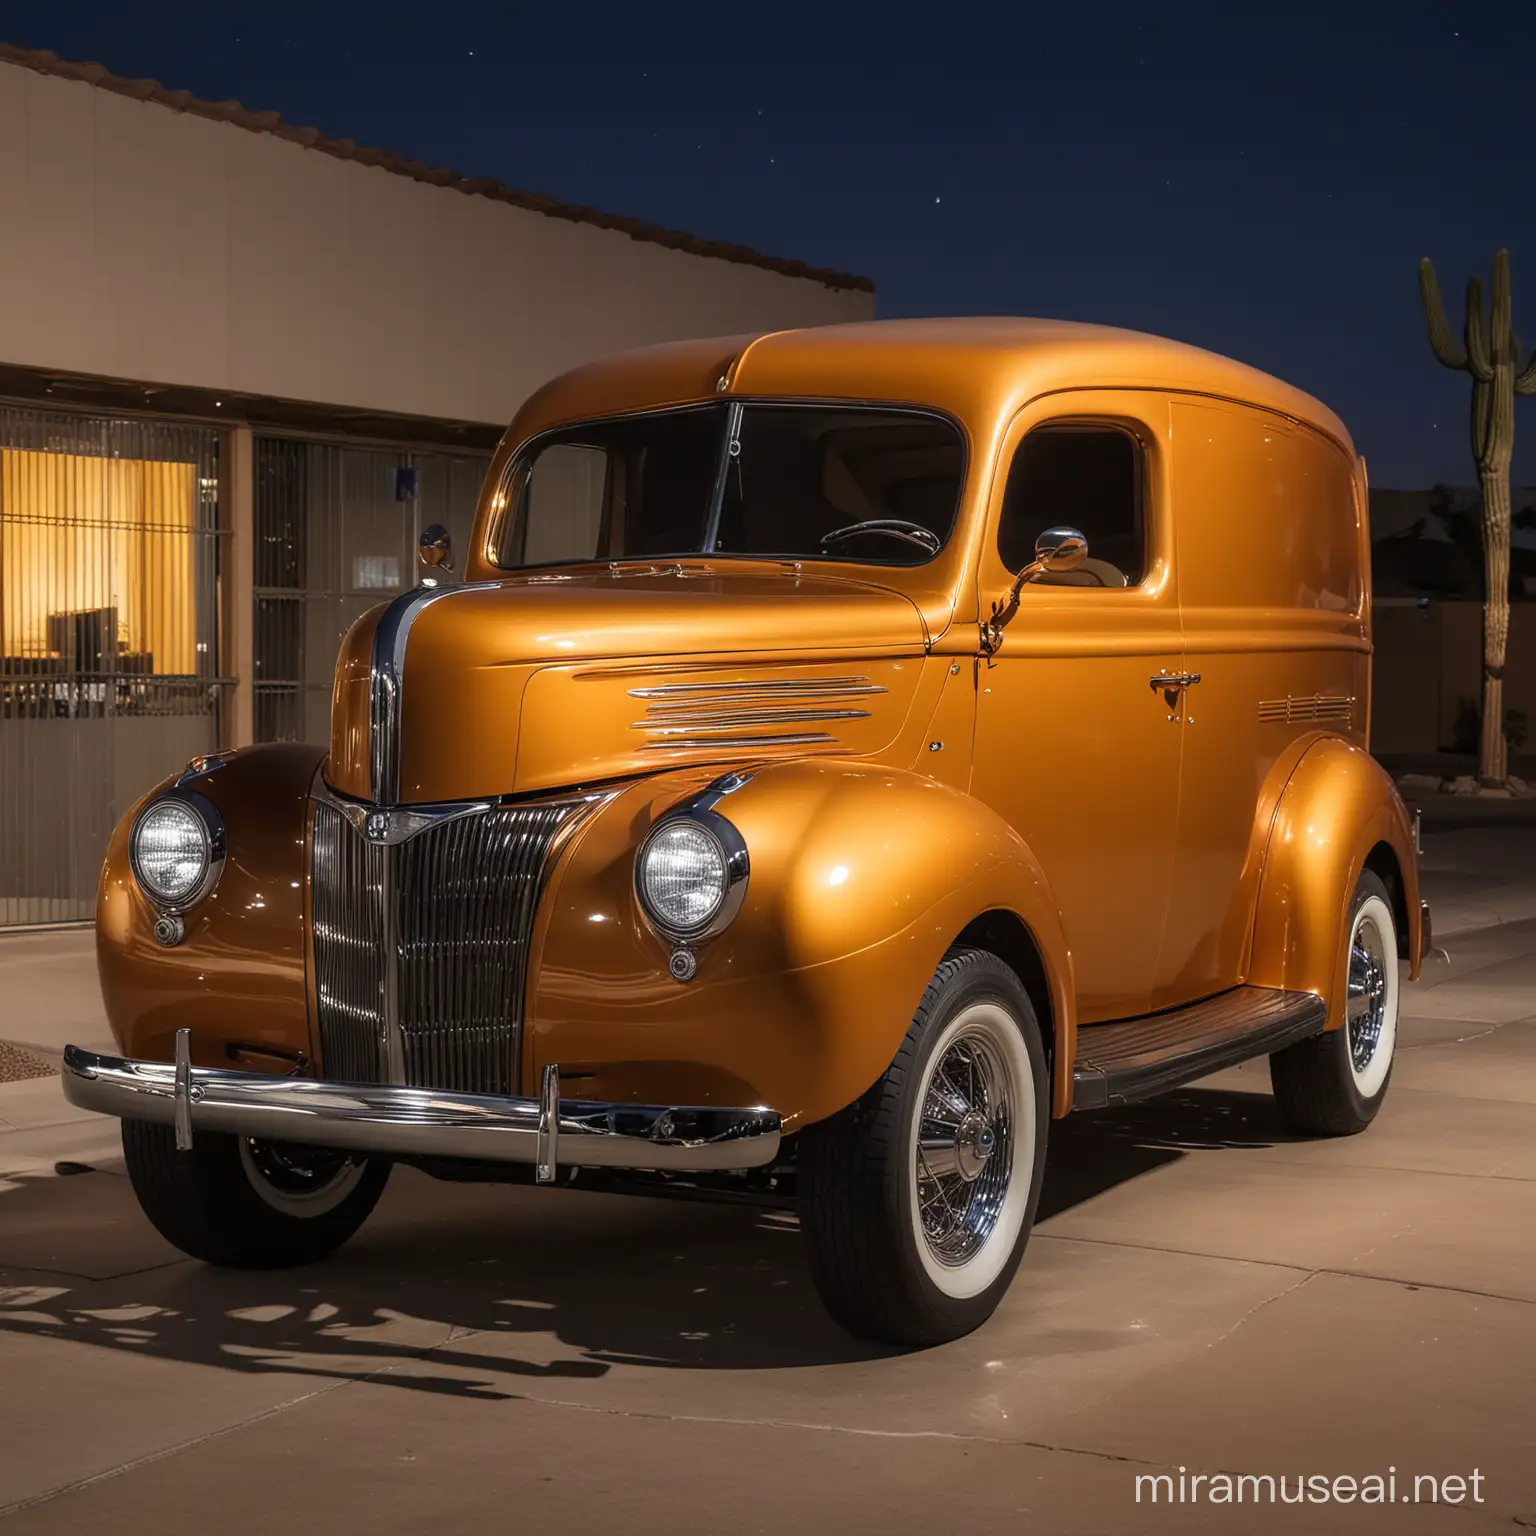 1941 Ford Panel Truck Retro Hot Rod on Phoenix Street at Night